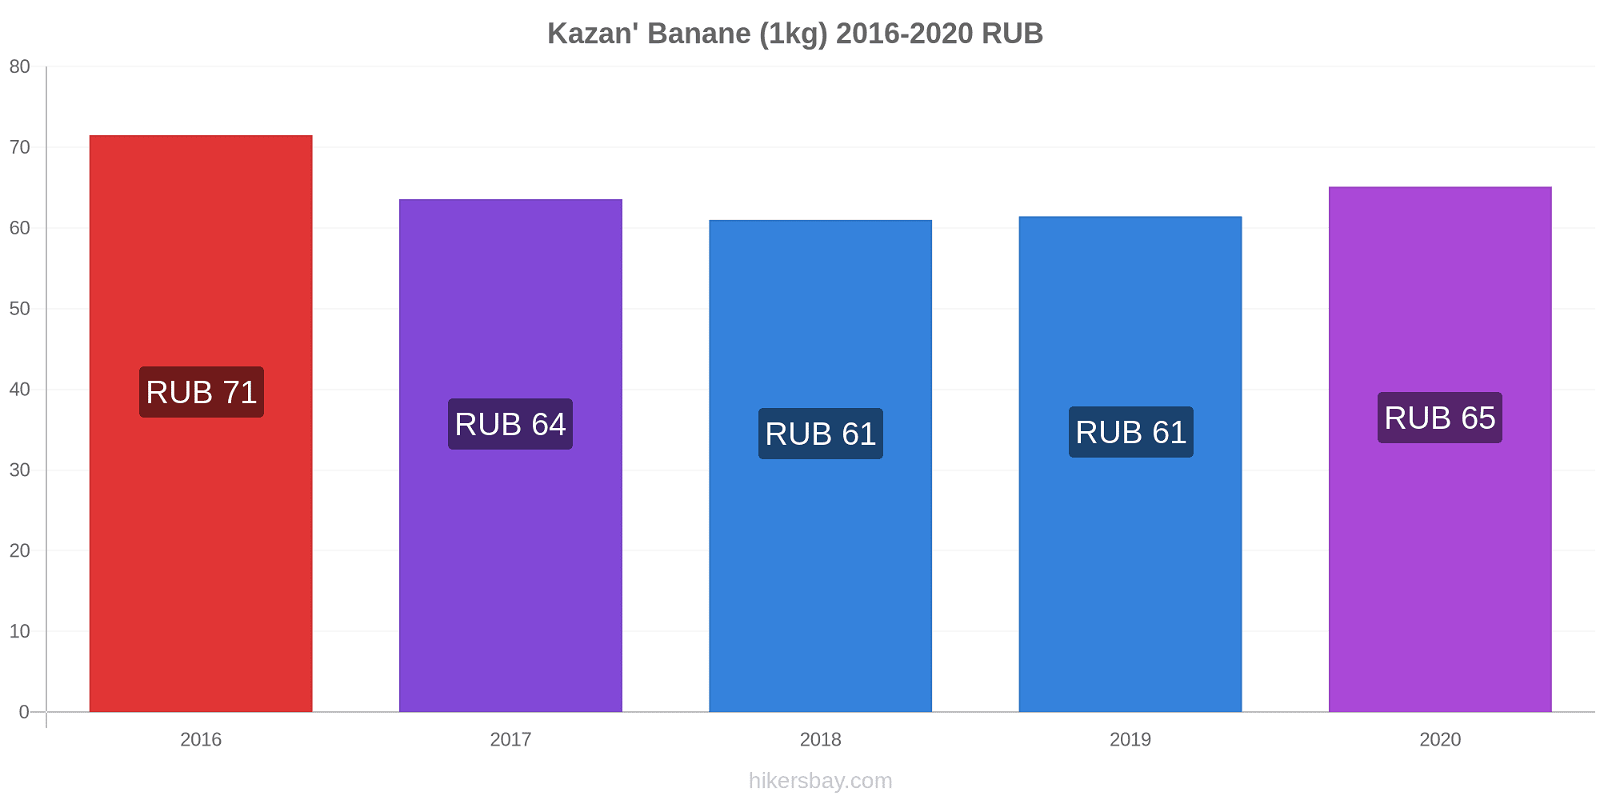 Kazan' variazioni di prezzo Banana (1kg) hikersbay.com